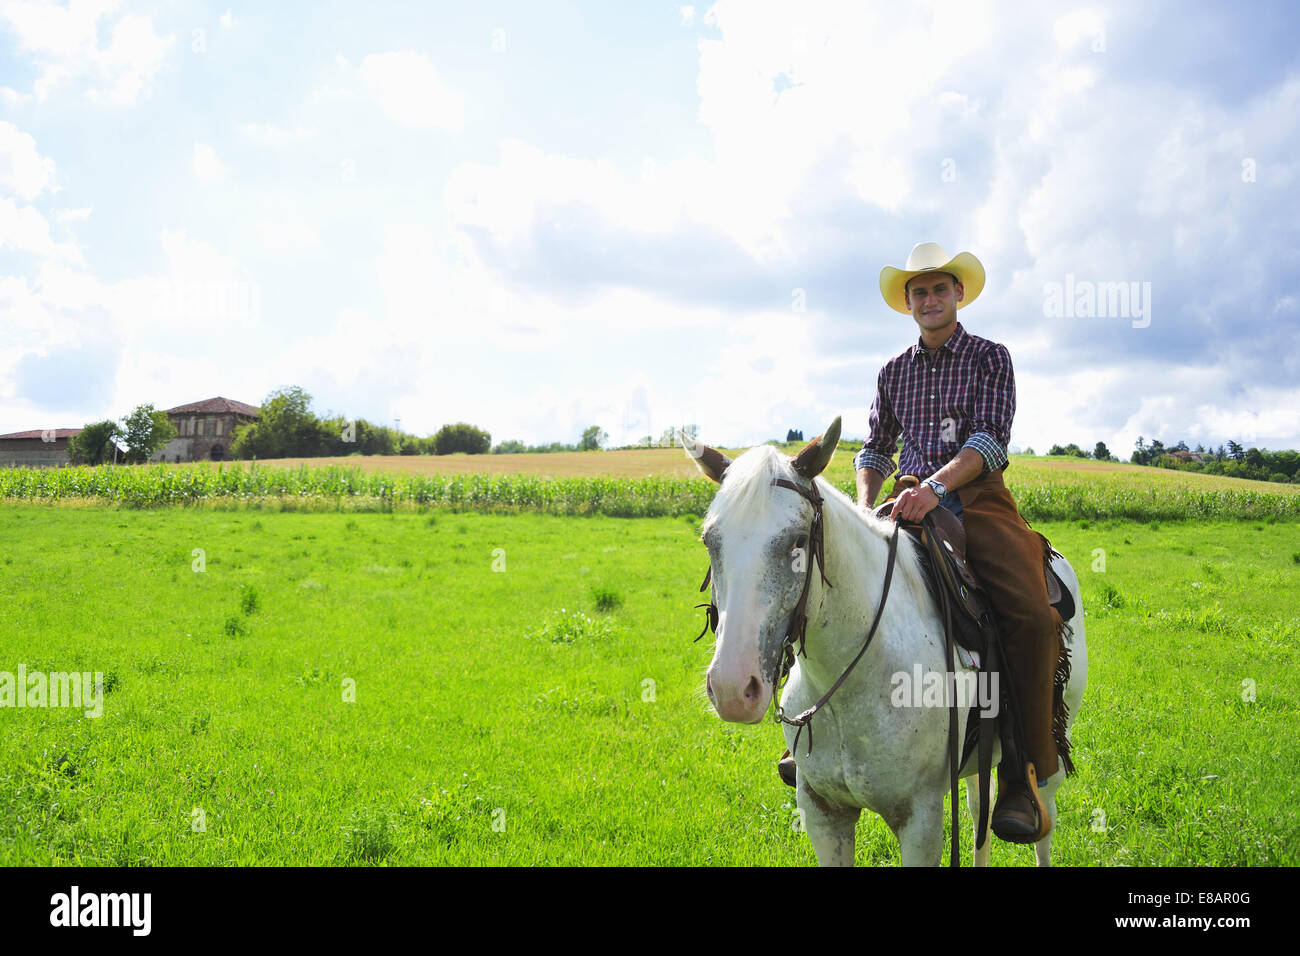 Portrait of young man in cowboy gear on horseback in field Stock Photo